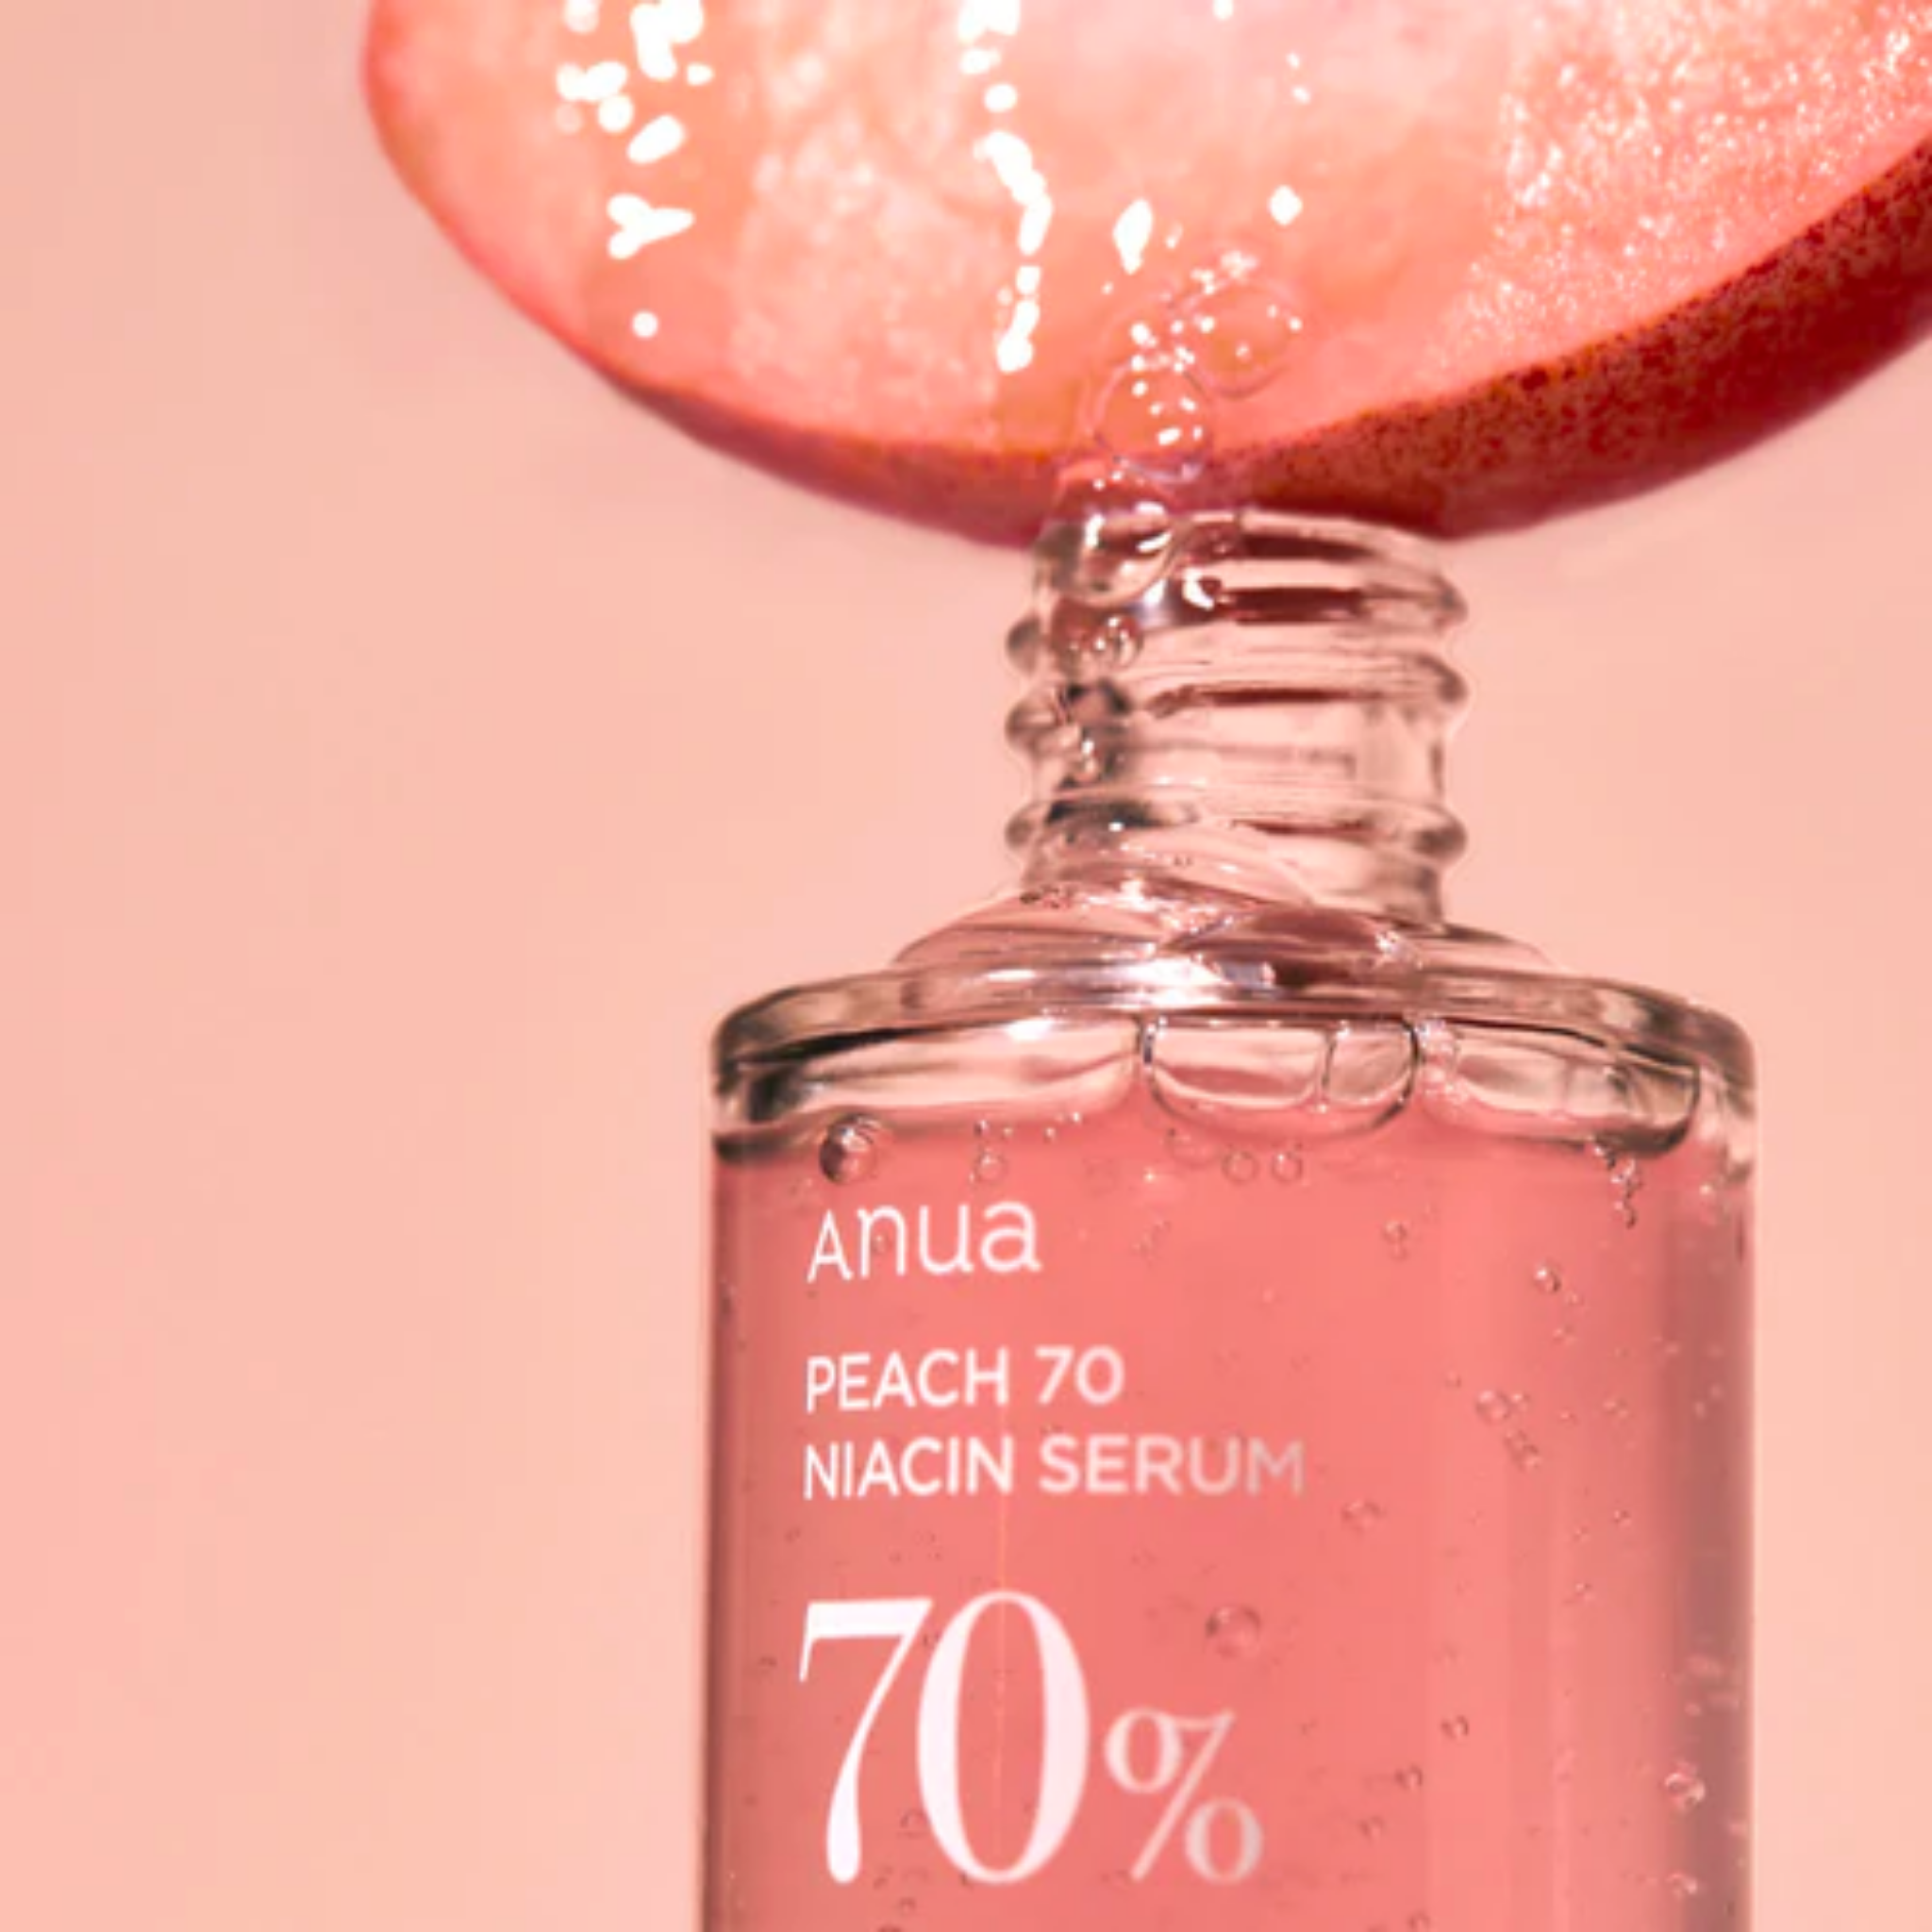 ANUA Peach 70% Niacin Serum (30ml) texture